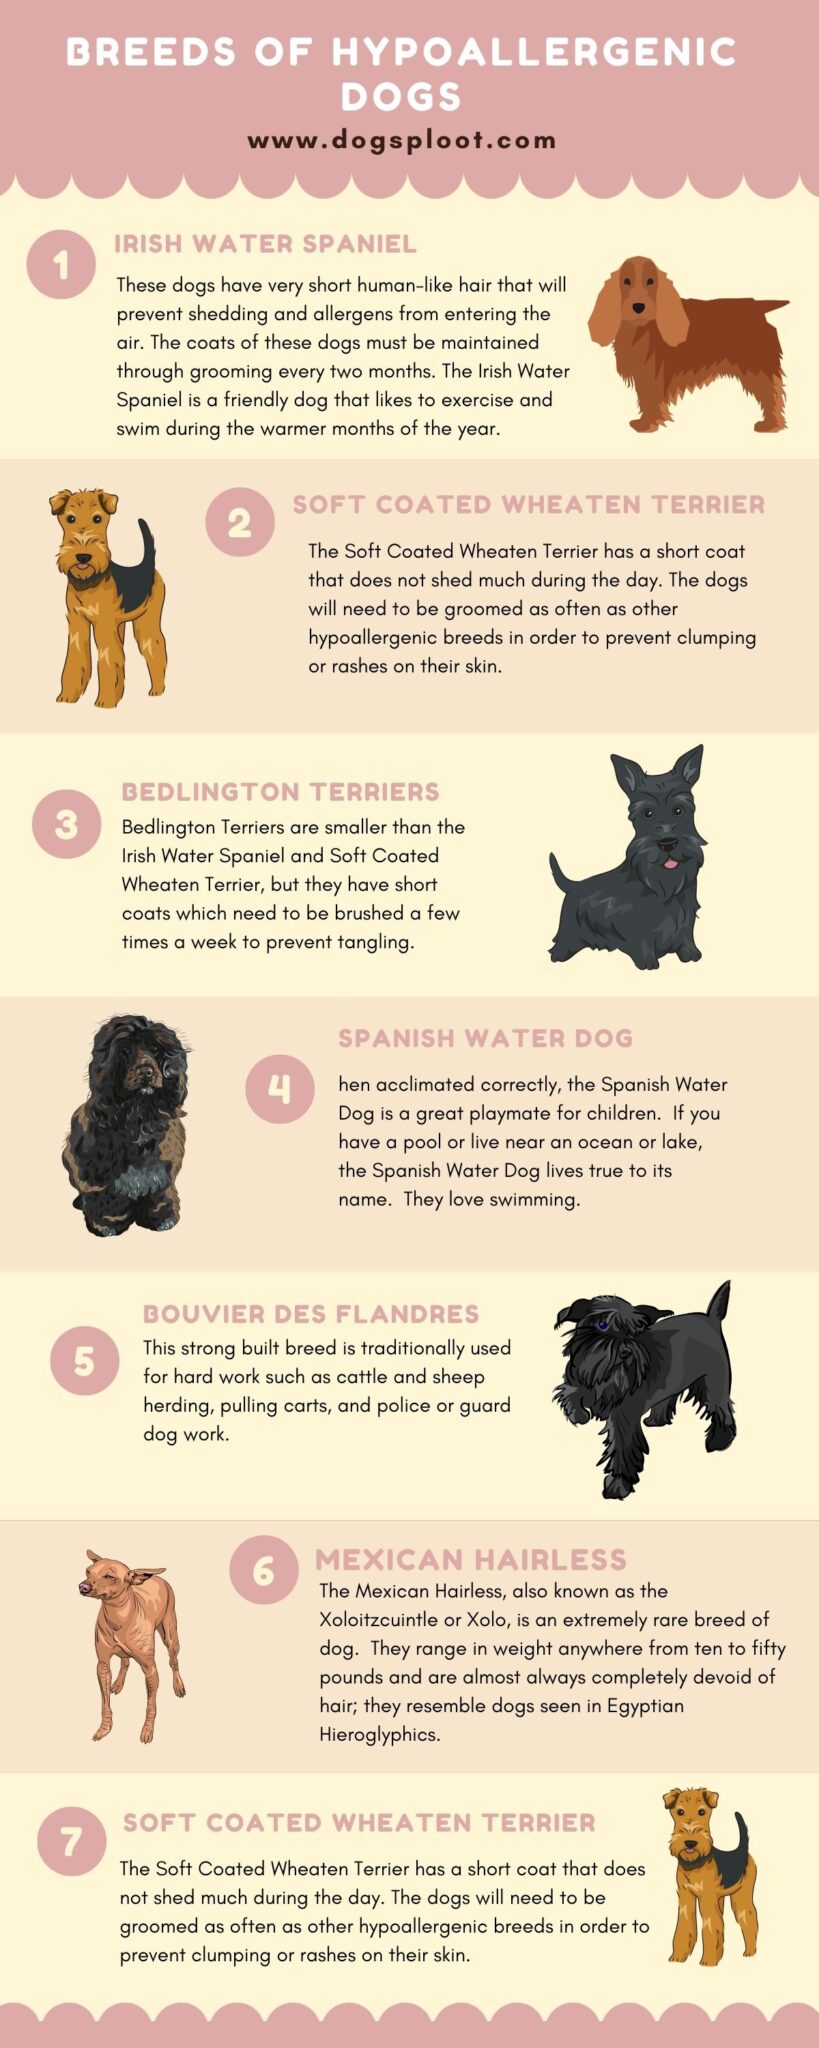 Breeds of Hypoallergenic Dogs